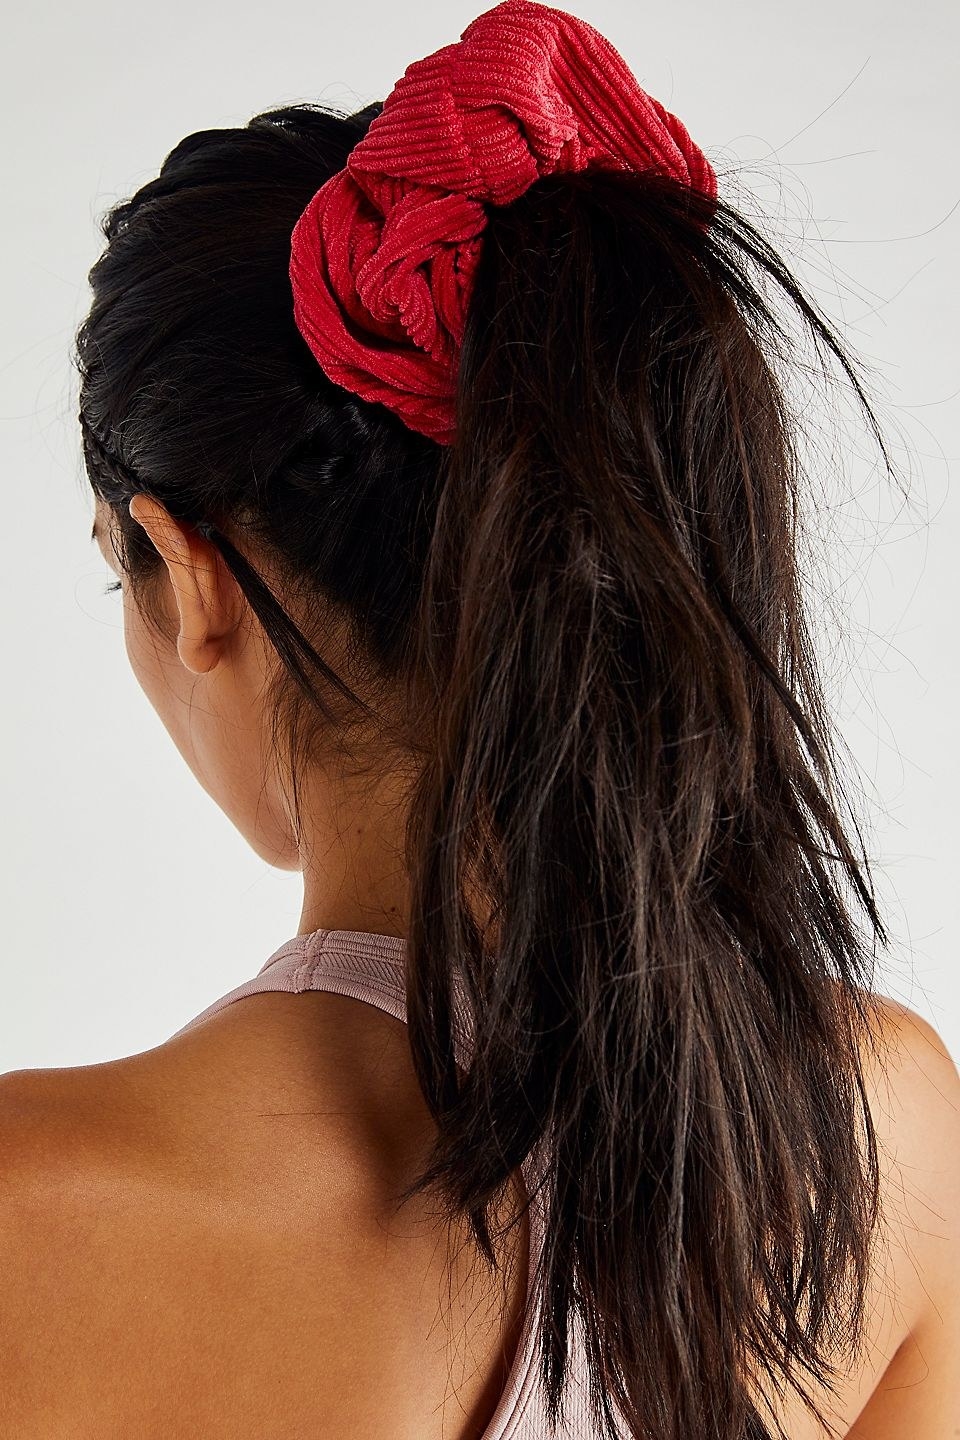 A model in the red scrunchie